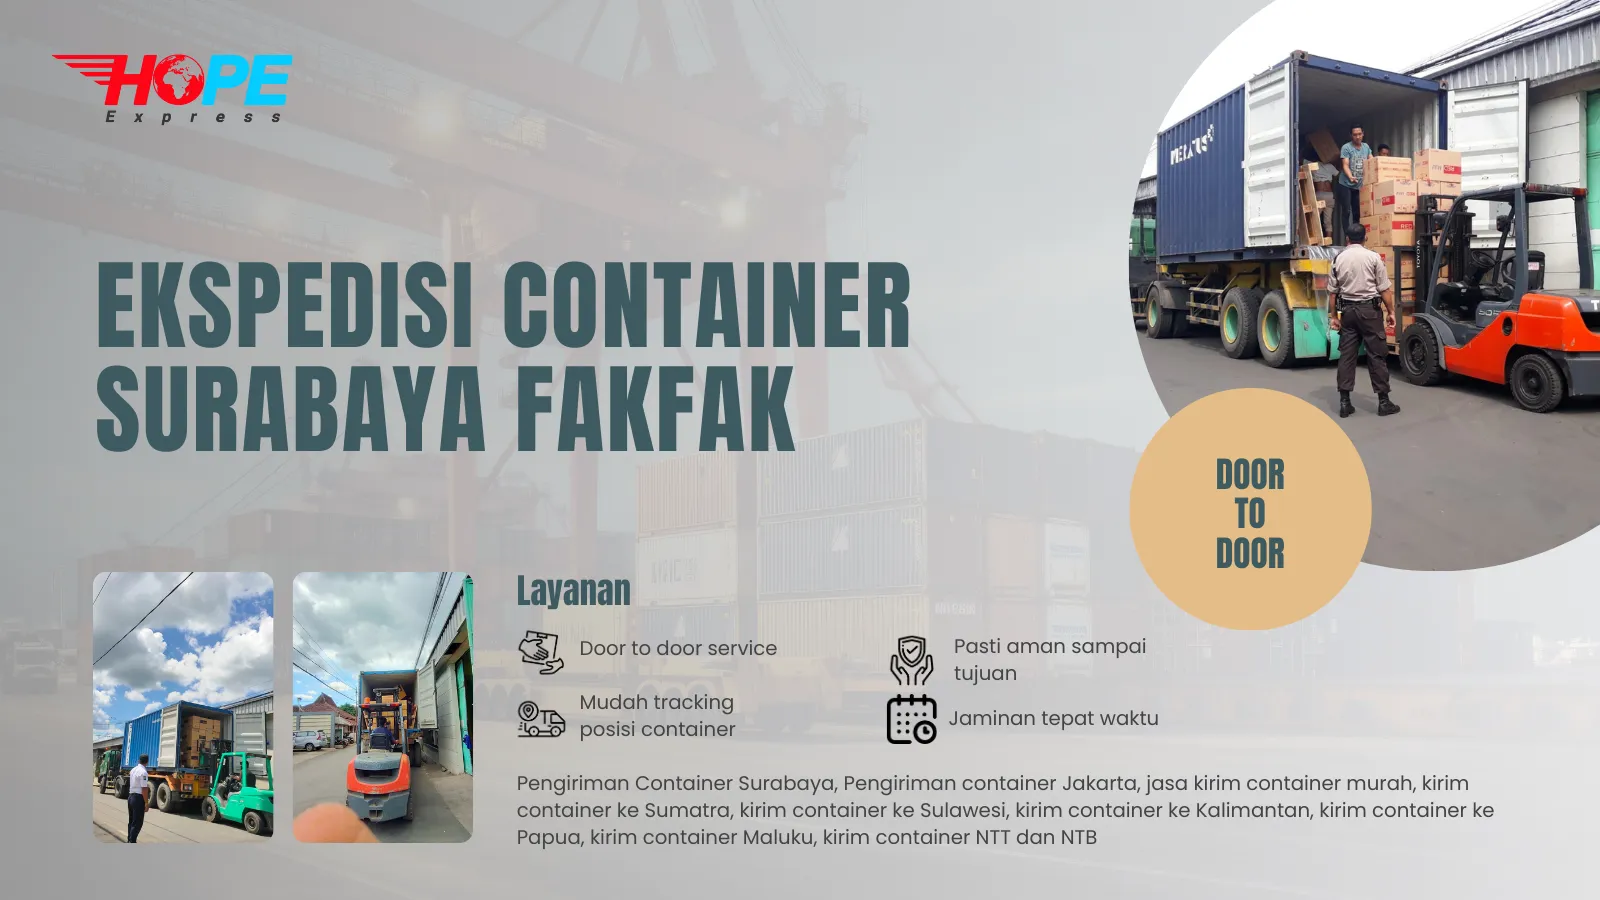 Ekspedisi Container Surabaya Fakfak